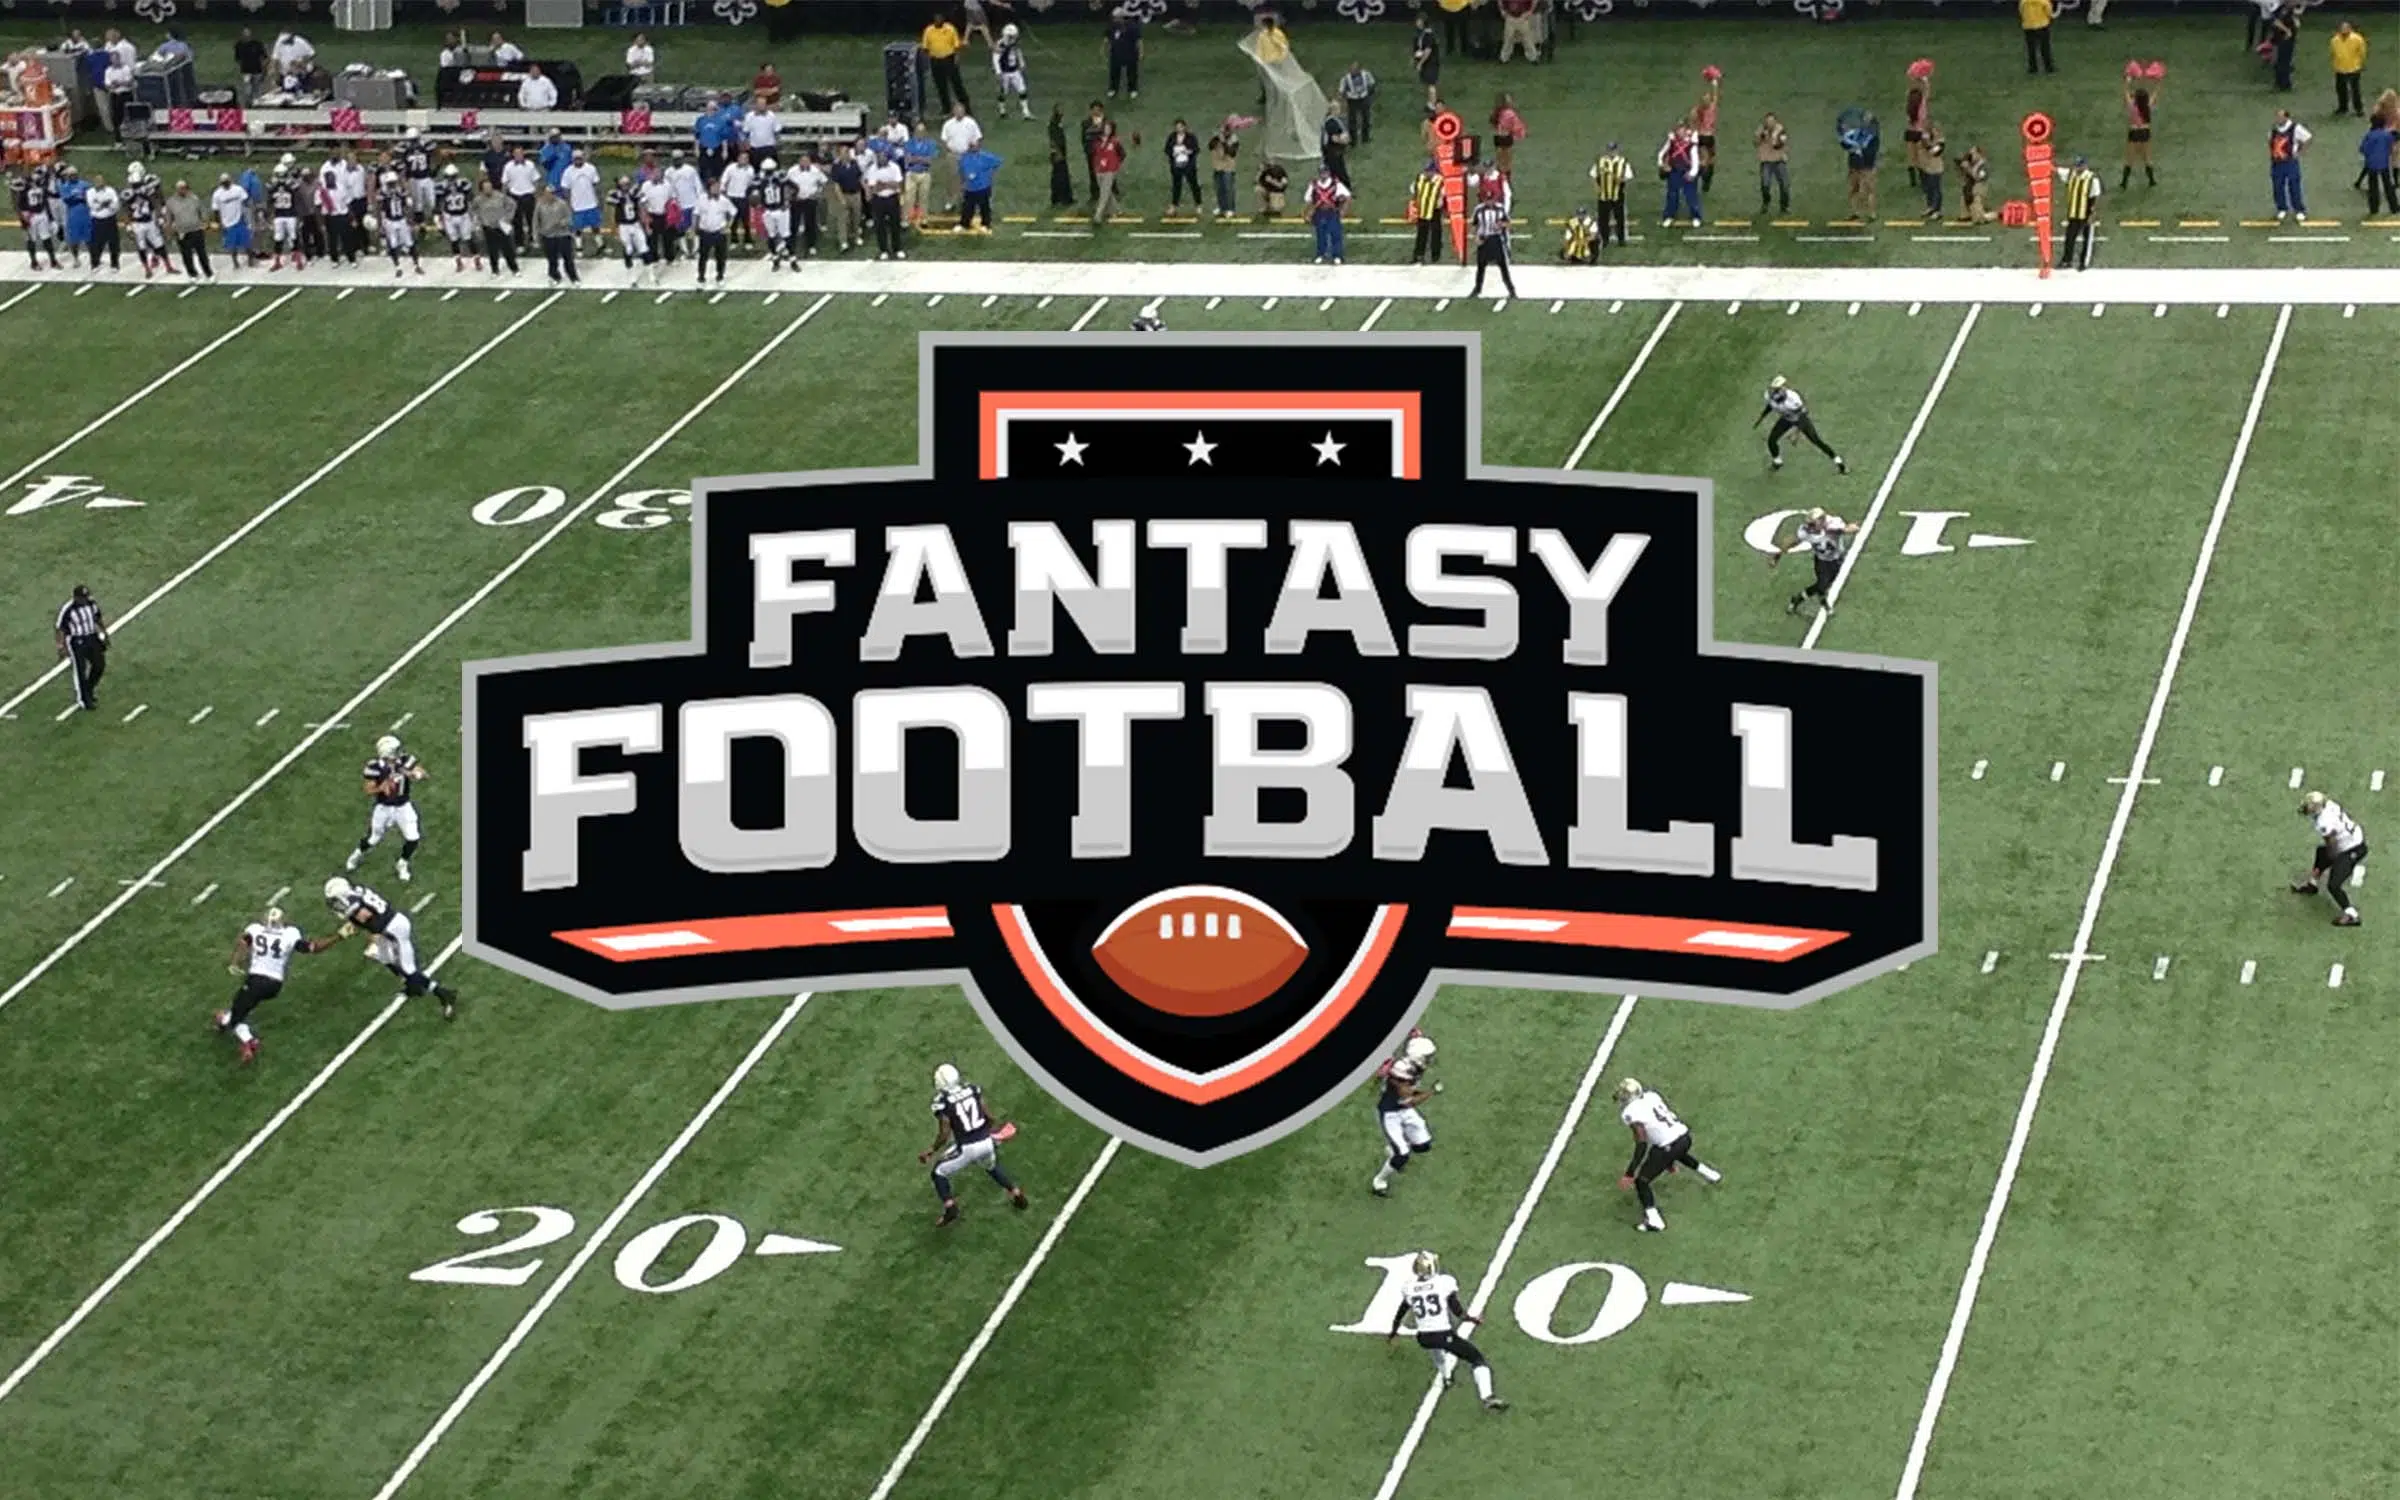 Fantasy football logo